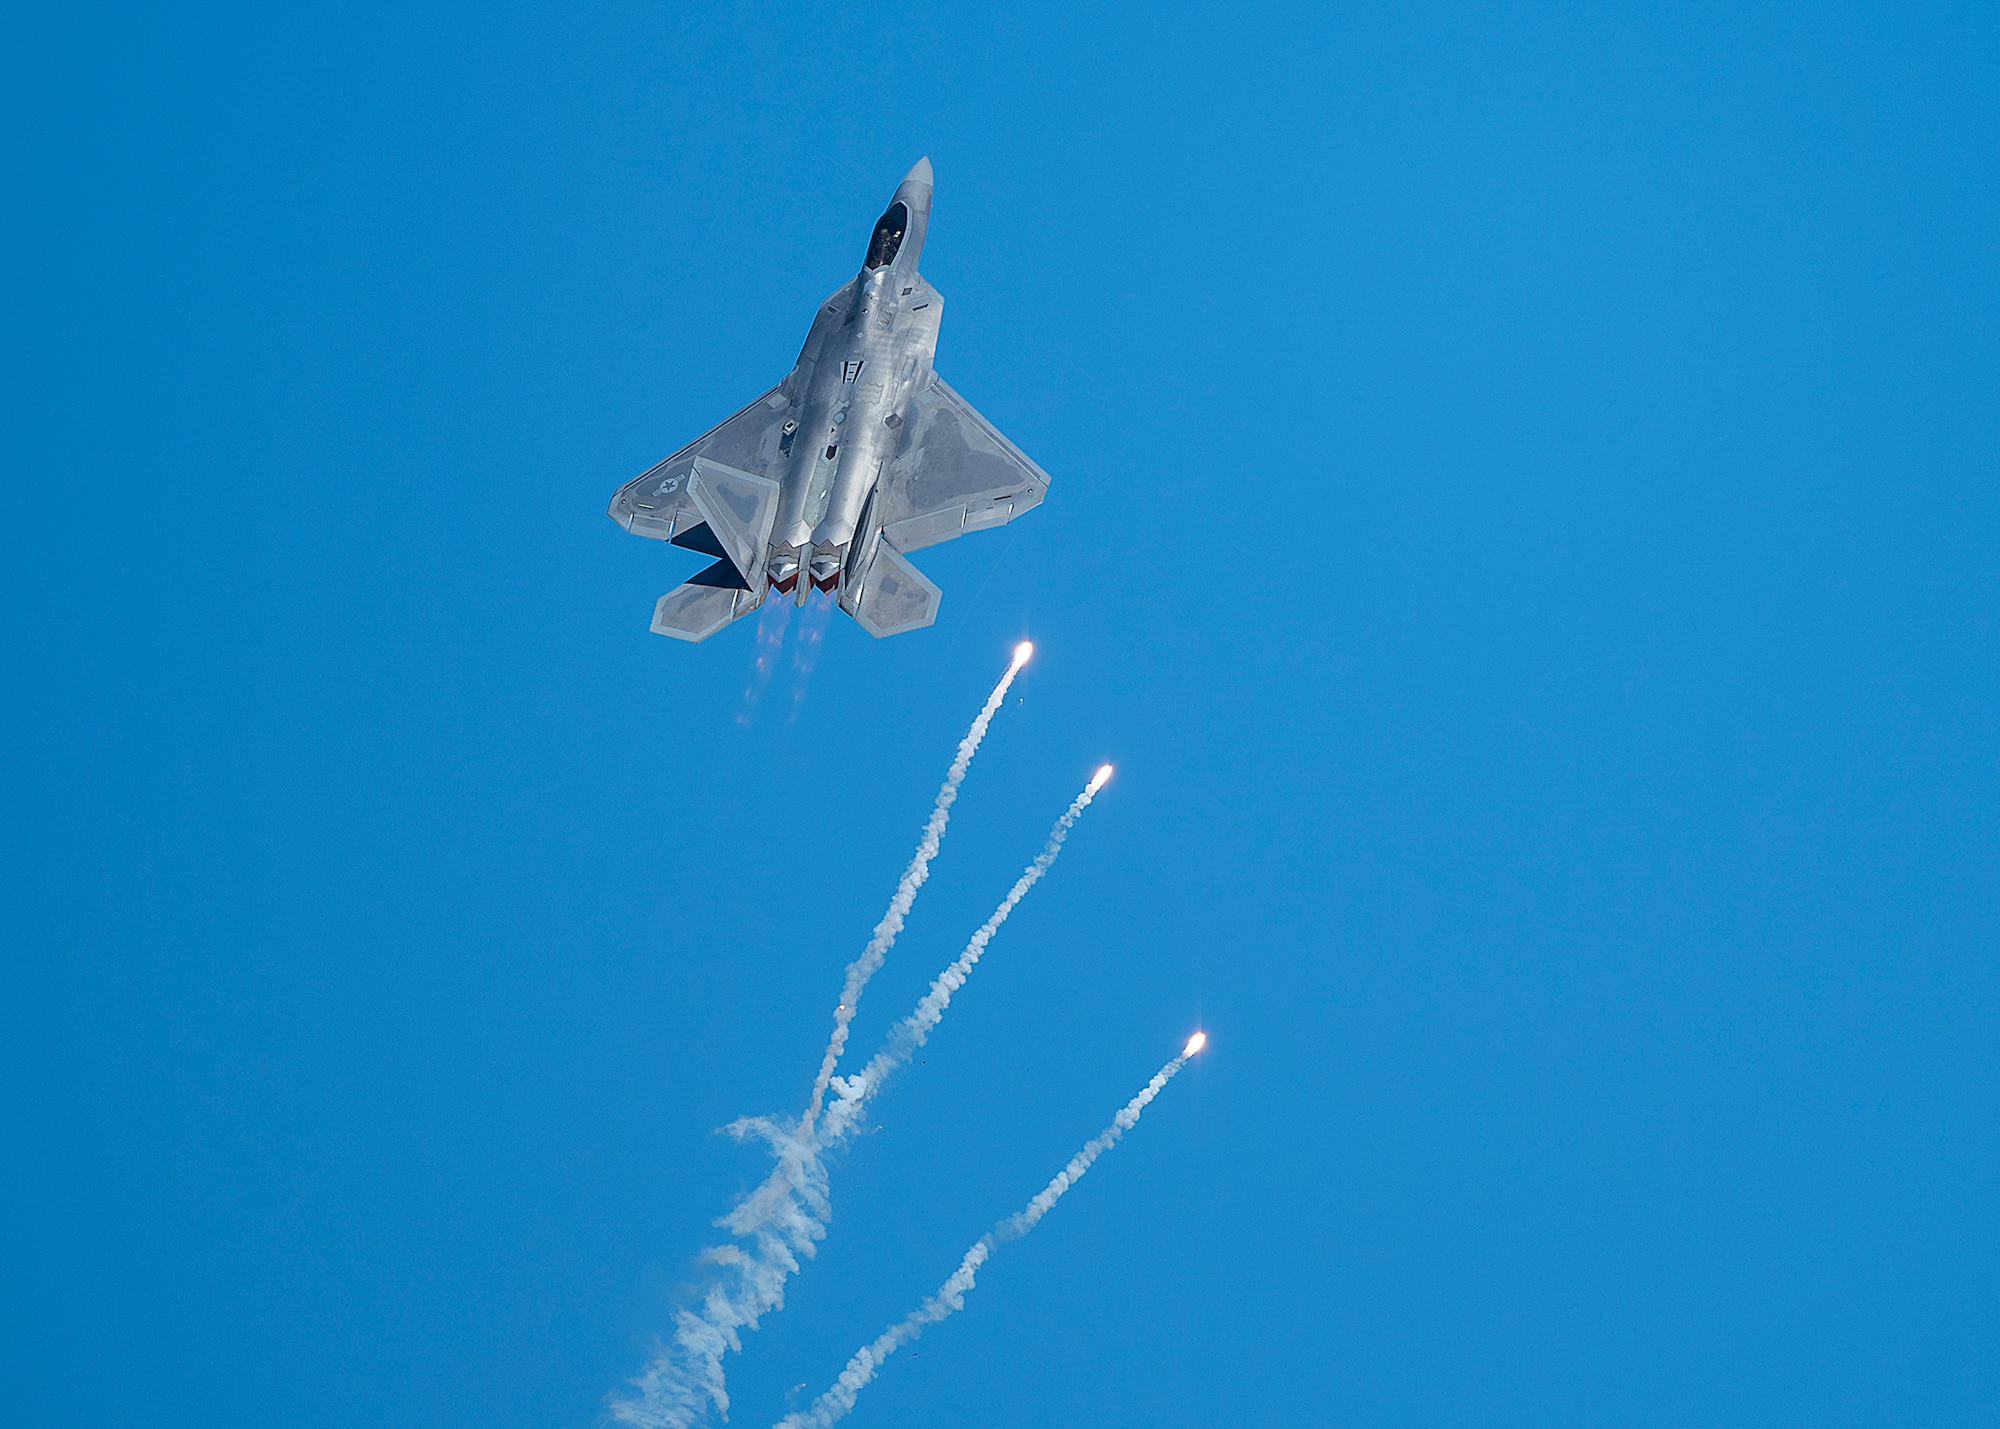 An F-22 Raptor fighter jet pops flares during air show